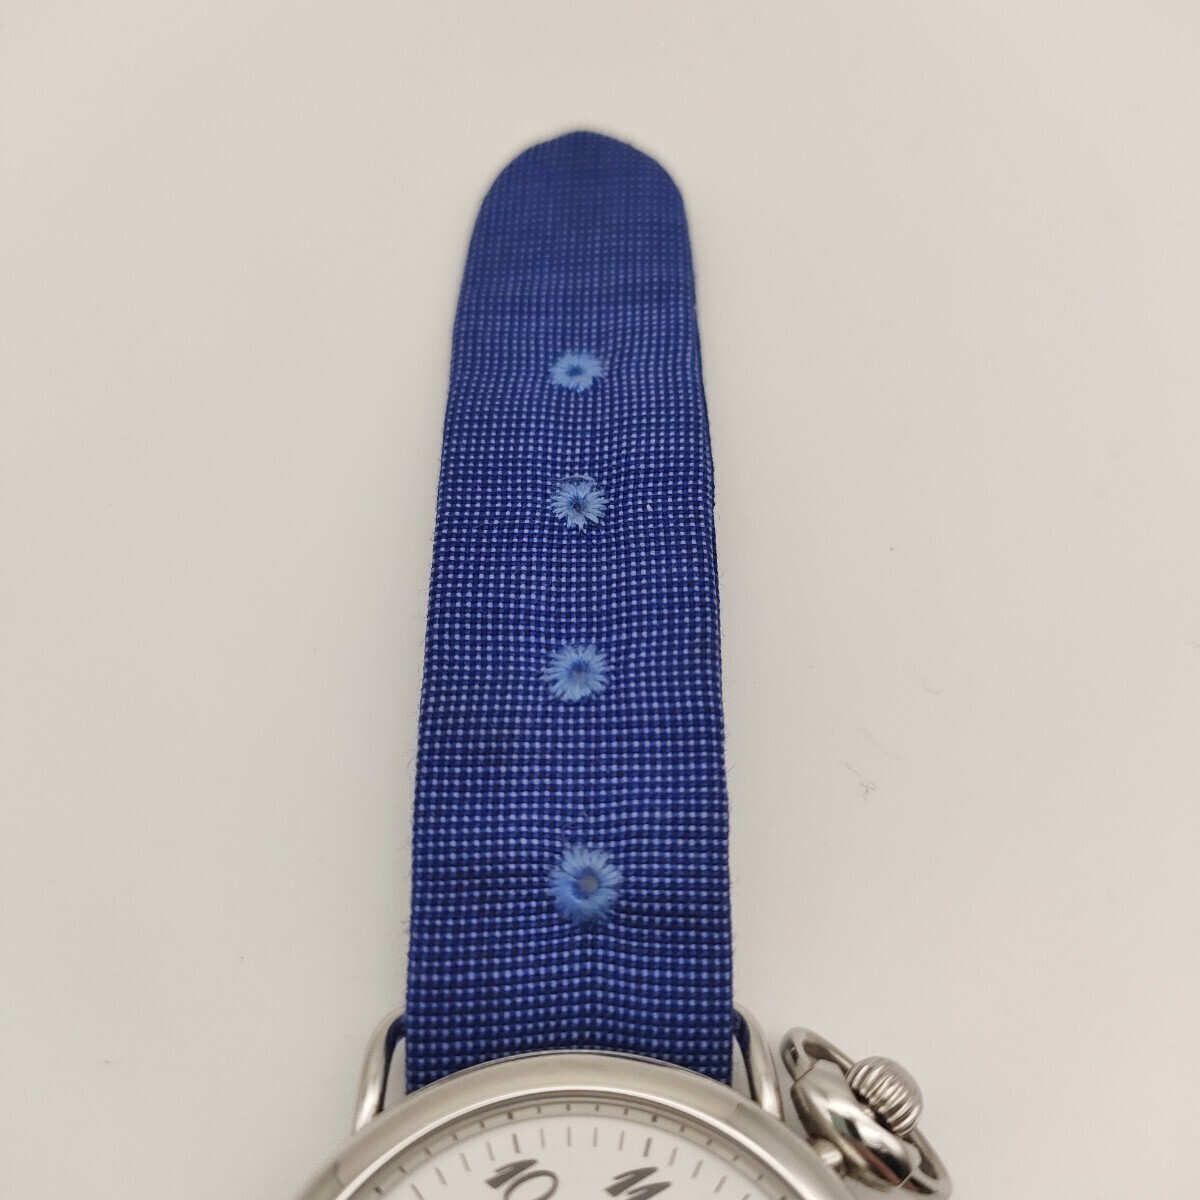 1 иен работа товар CALABRITTO карманные часы наручные часы белый циферблат текстильный ремень аналог кварц 